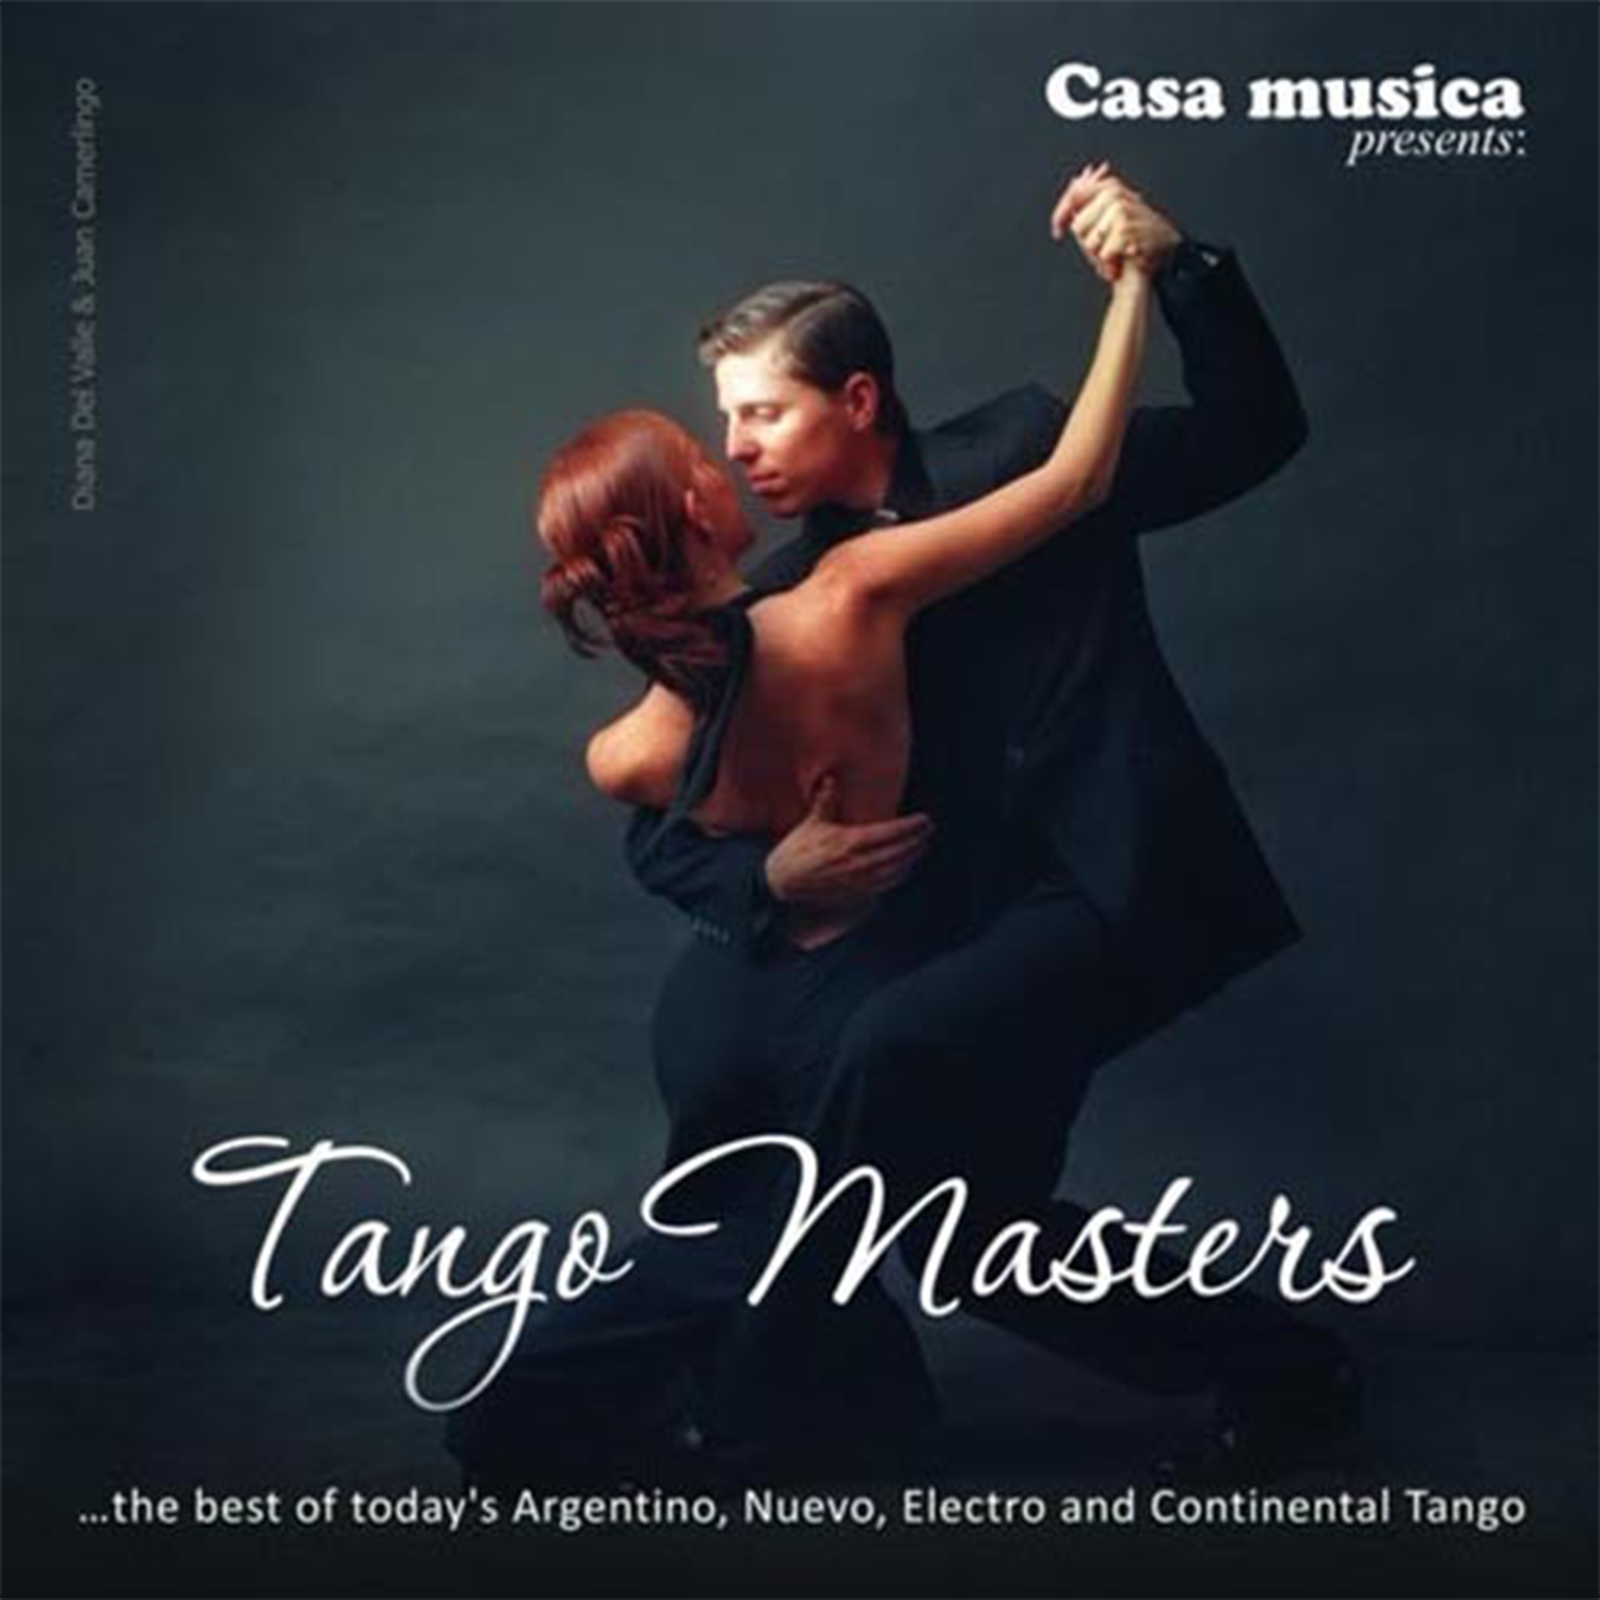 Casa musica. Танго Фернандо. Santa Maria Gotan Project. Дпо28 Tango. Masters of Tango Folklore argentino.